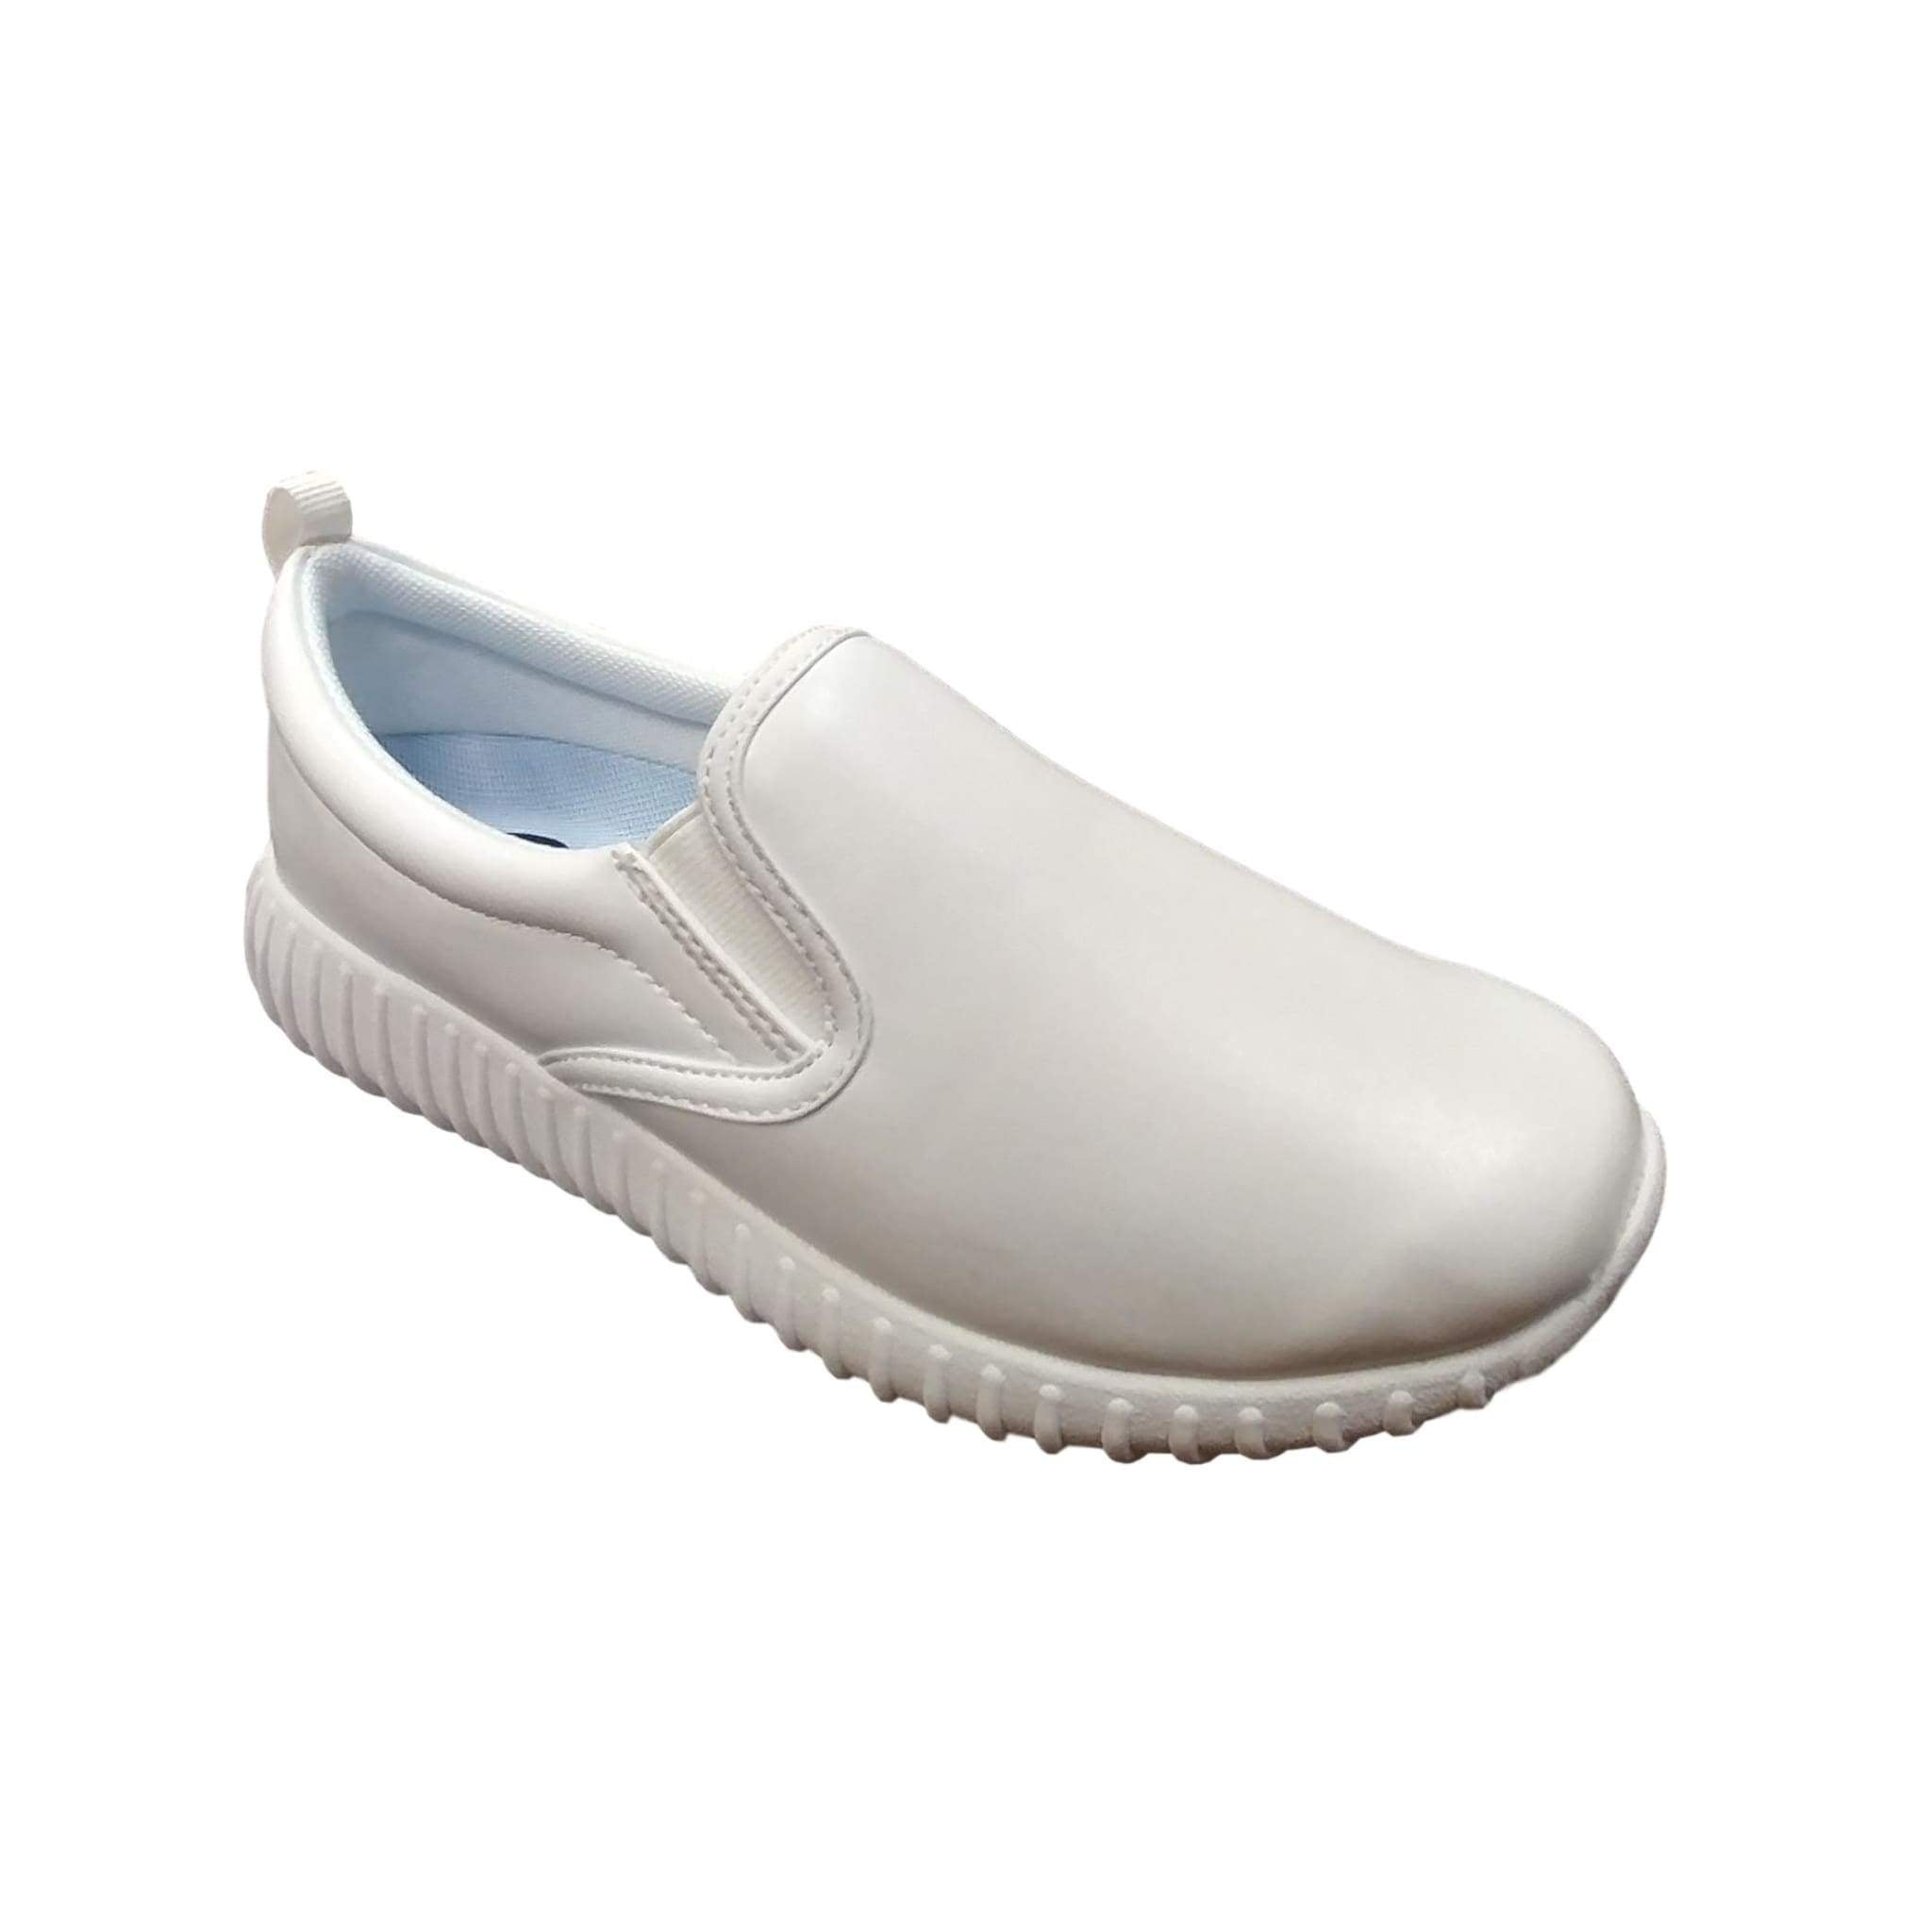 slip resistant nursing shoes